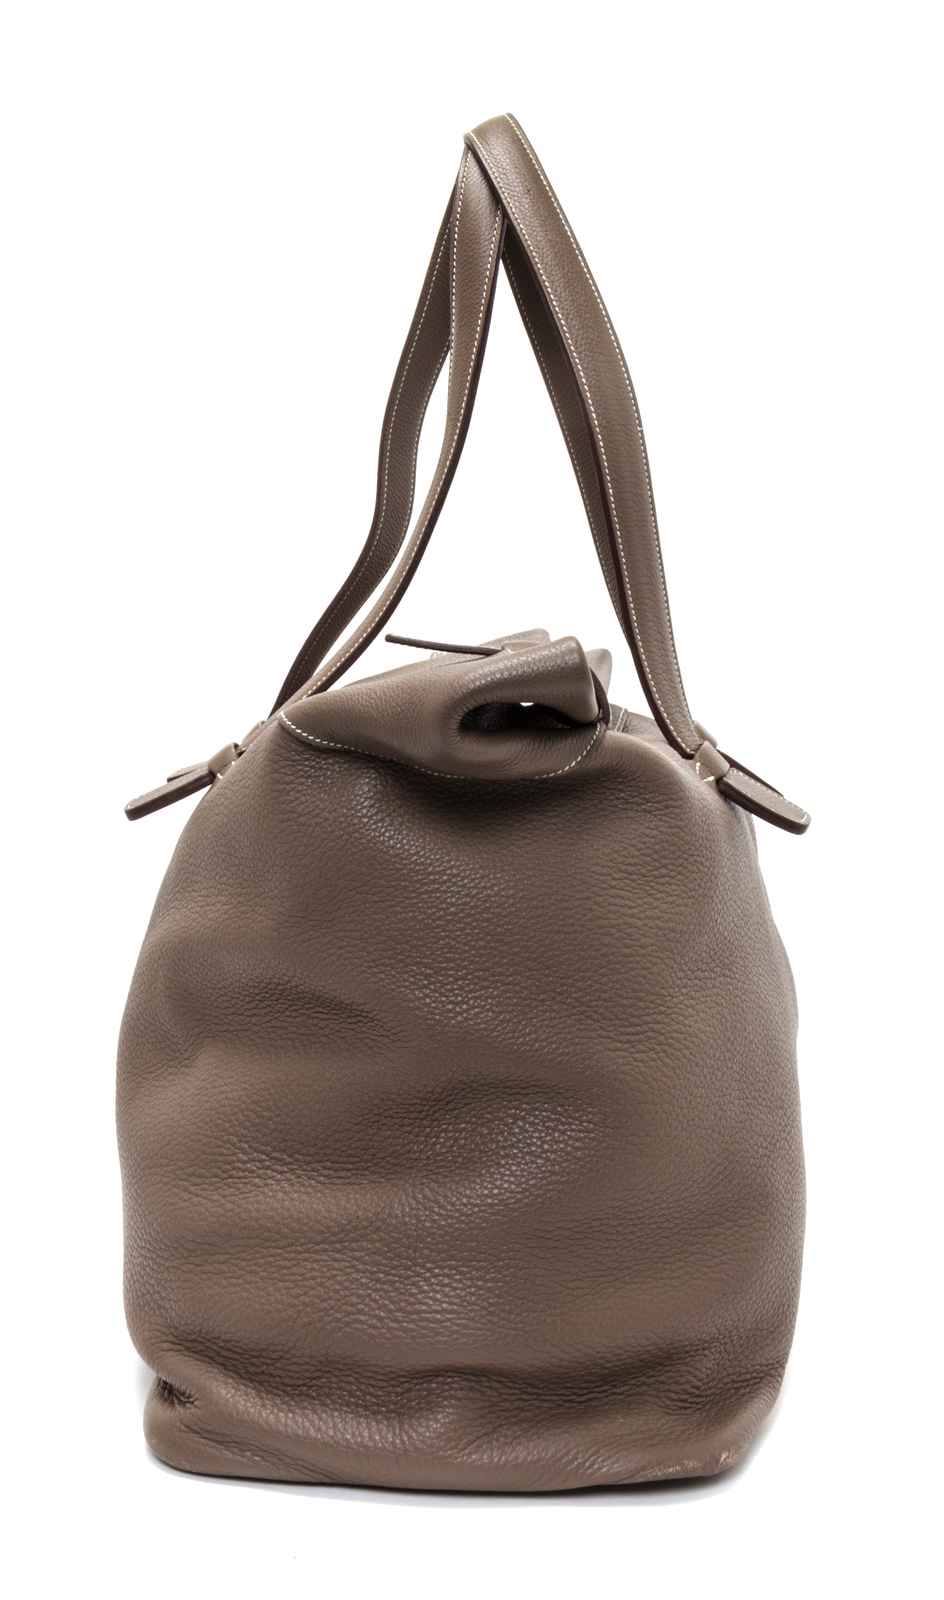 An Hermes Etoupe Leather Thar Travel Bag. 21.5 x 18 x 10.